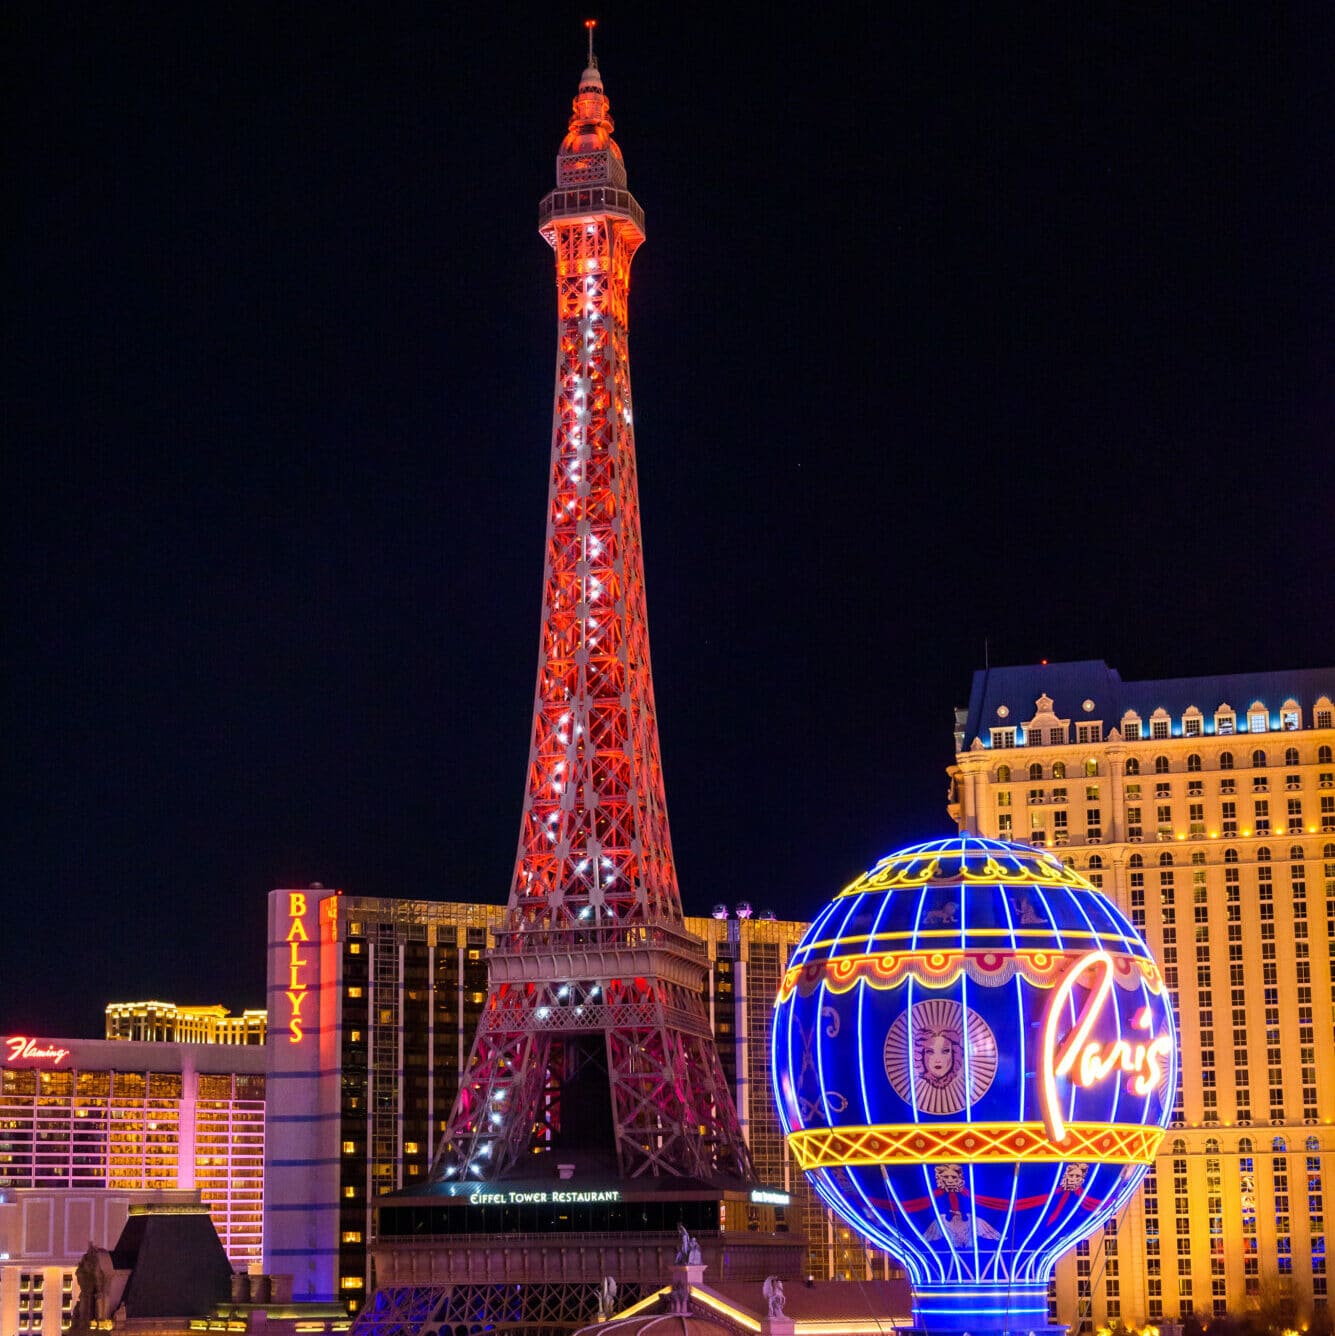 Paris Las Vegas pink lights for Valentine's Day